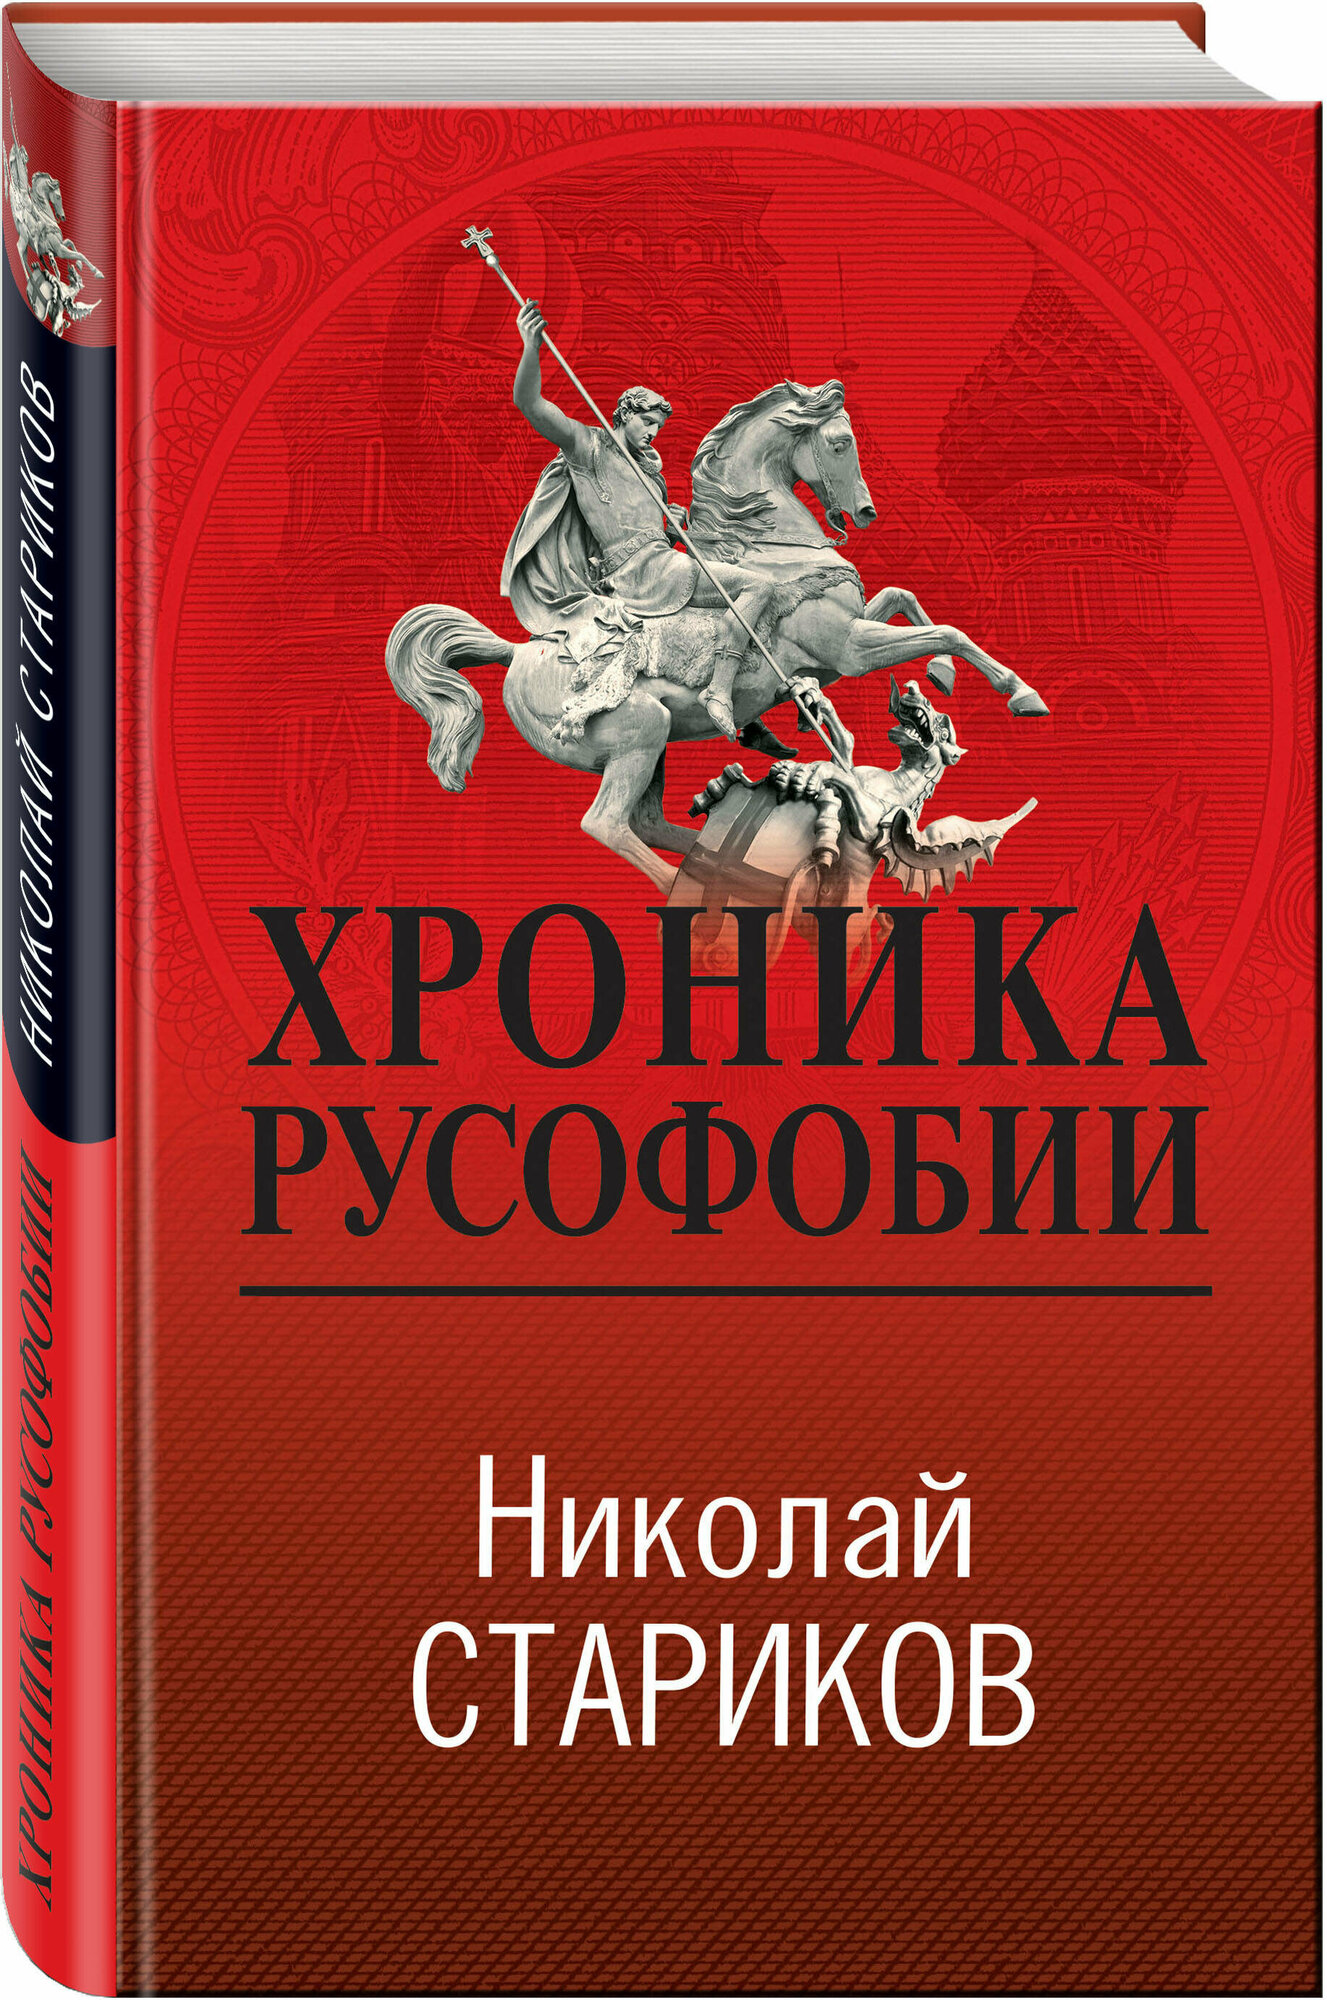 Хроника русофобии Книга Стариков НВ 16+